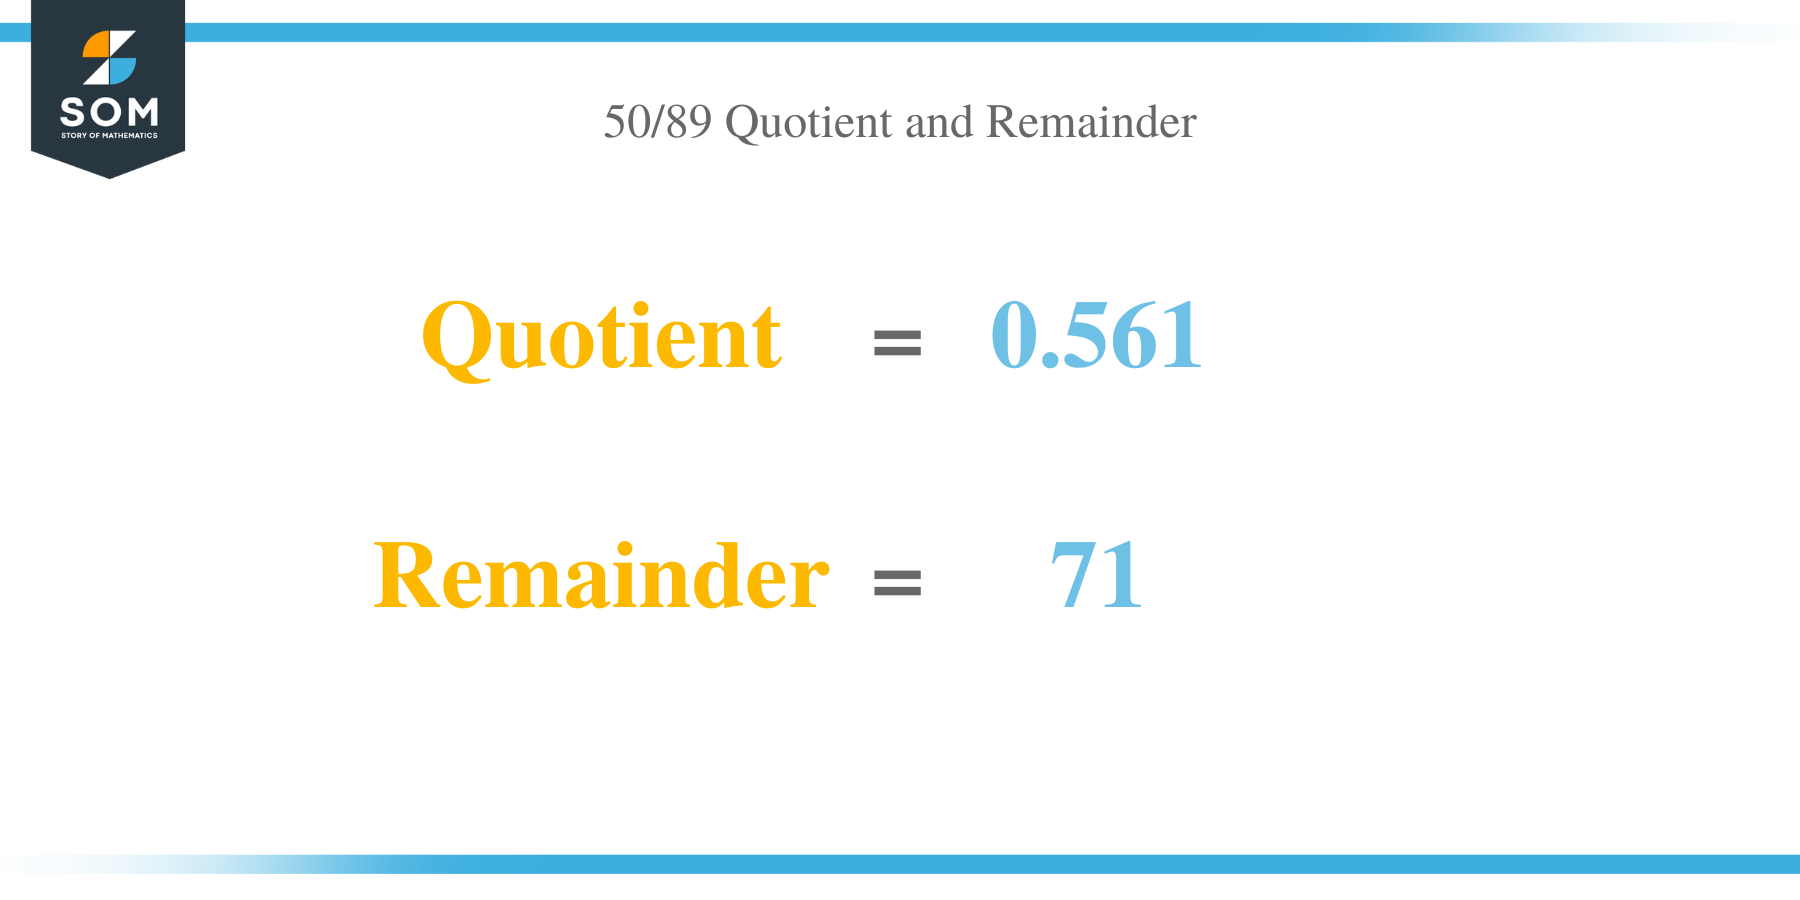 Quotient and Remainder of 50 per 89